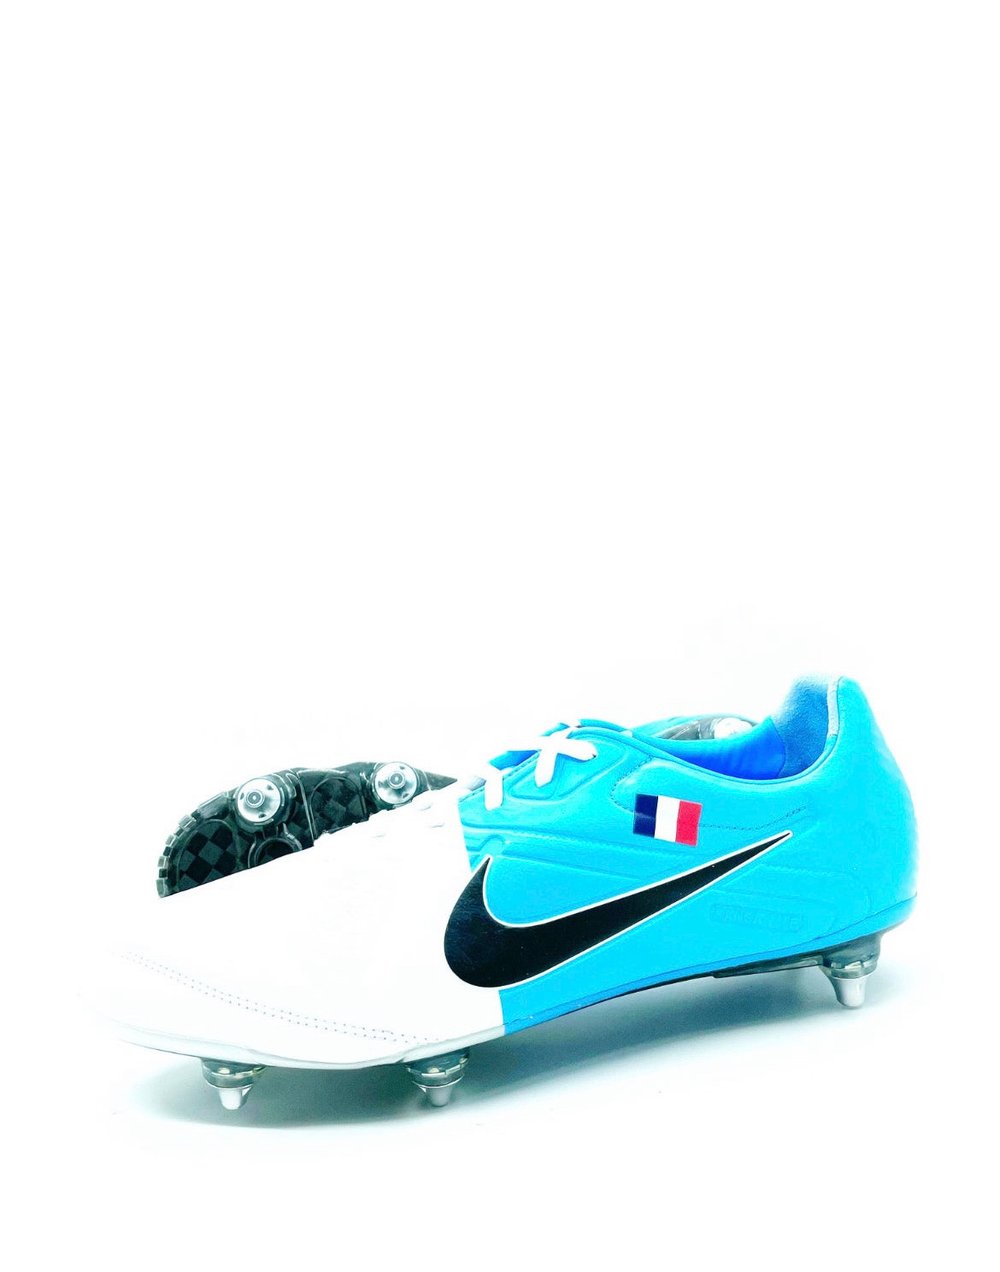 Image of Nike Ctr360 Elite SG white/blue 